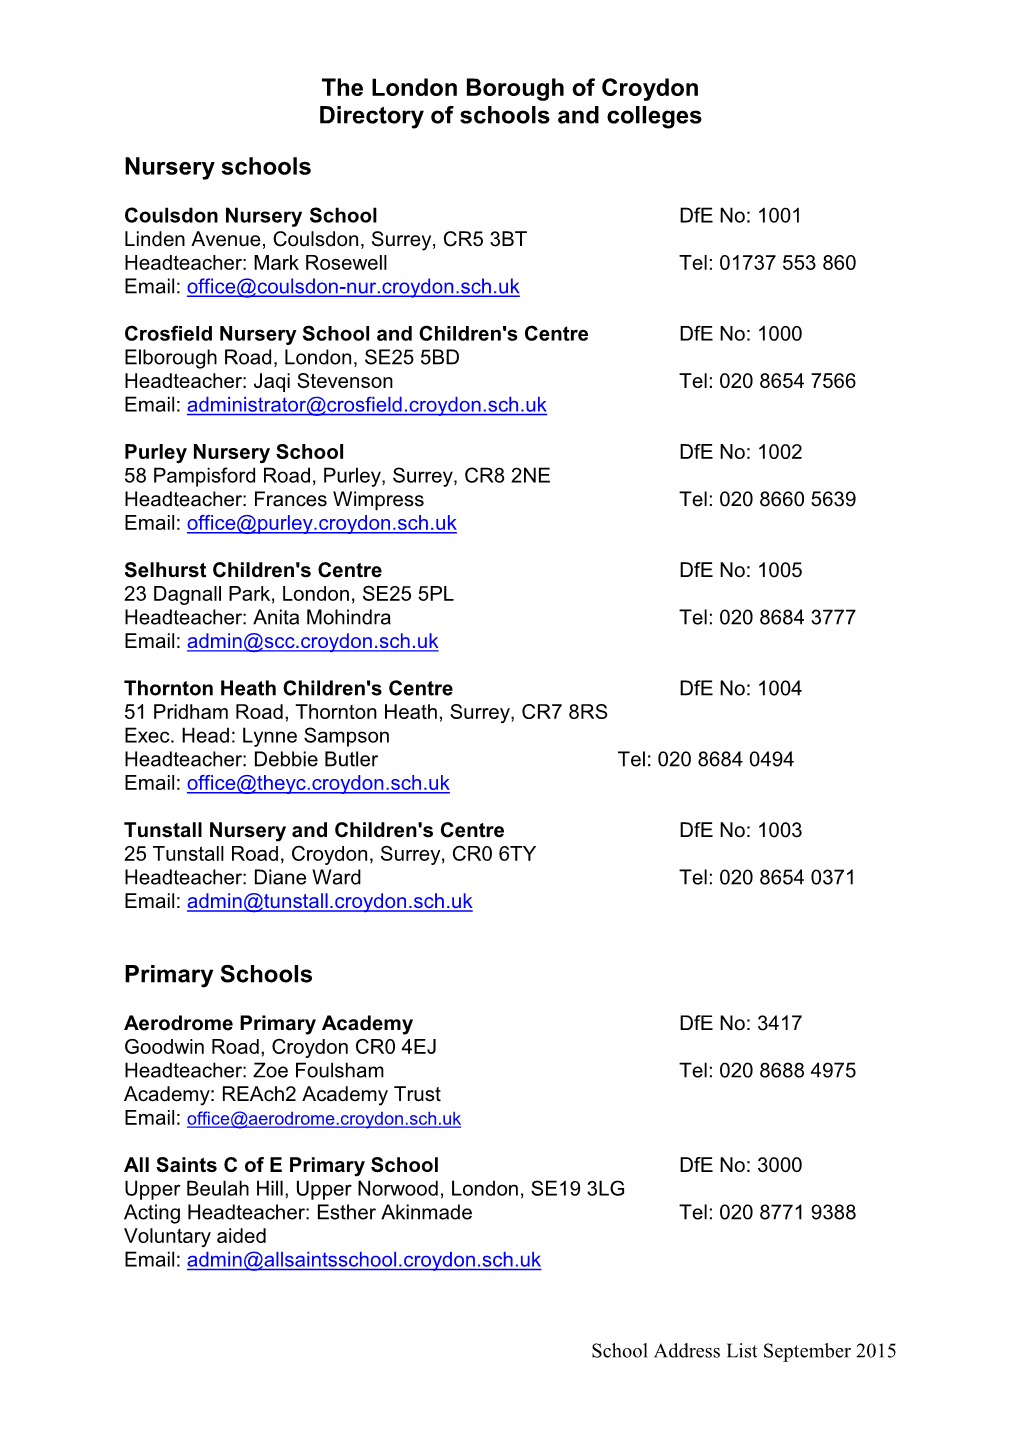 Croydon School Addresses and Phone Numbers Sep15.Pdf